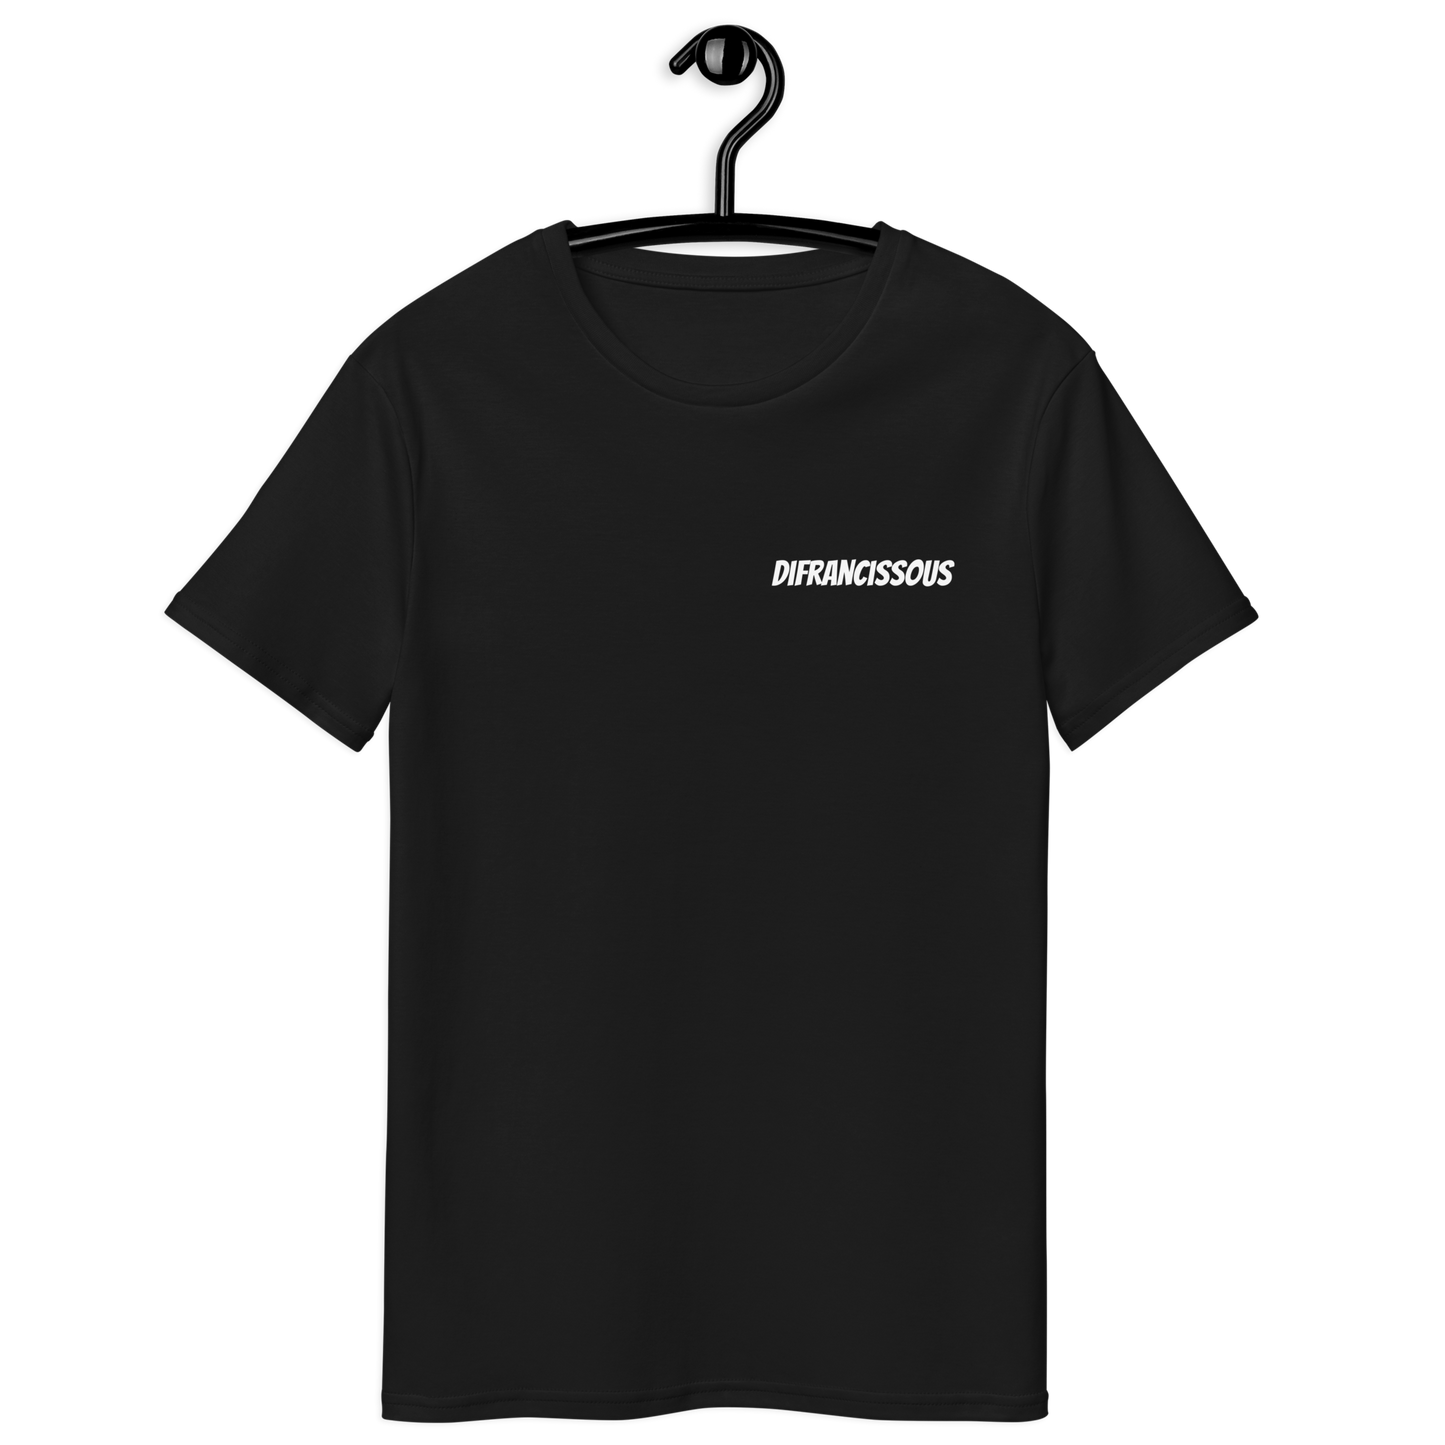 T-shirt 100% coton Difrancissous